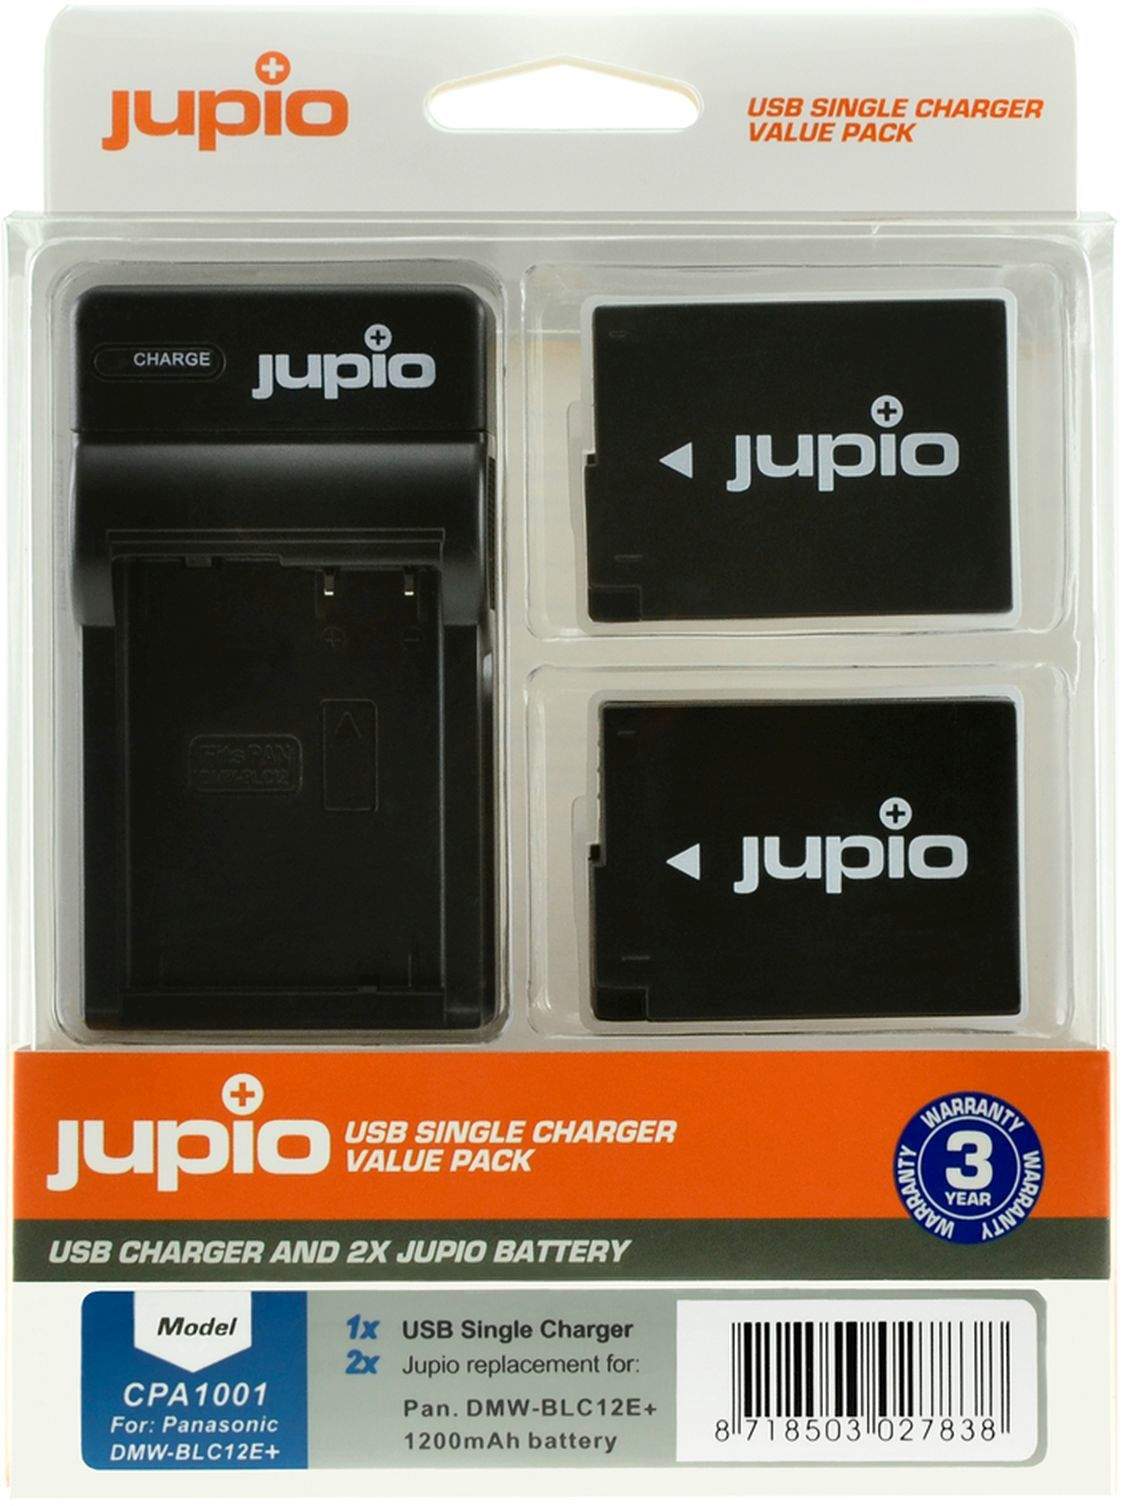 2 x Jupio Panasonic DMW-BLC12E Batteries & Single Charger Kit